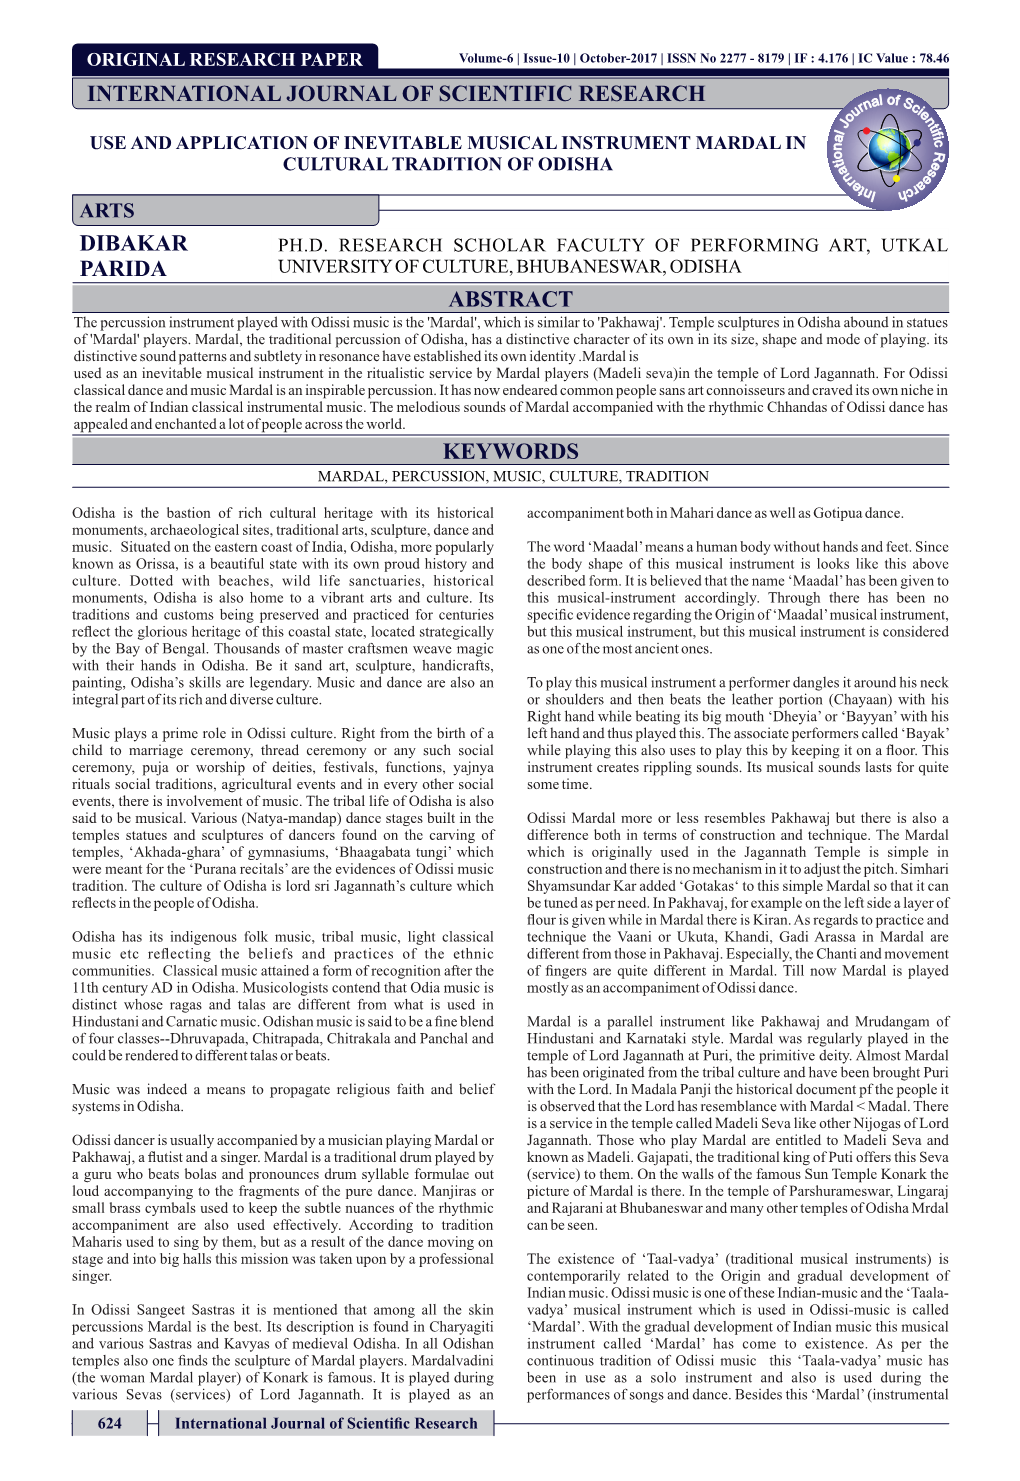 Dibakar Parida Abstract Keywords International Journal of Scientific Research